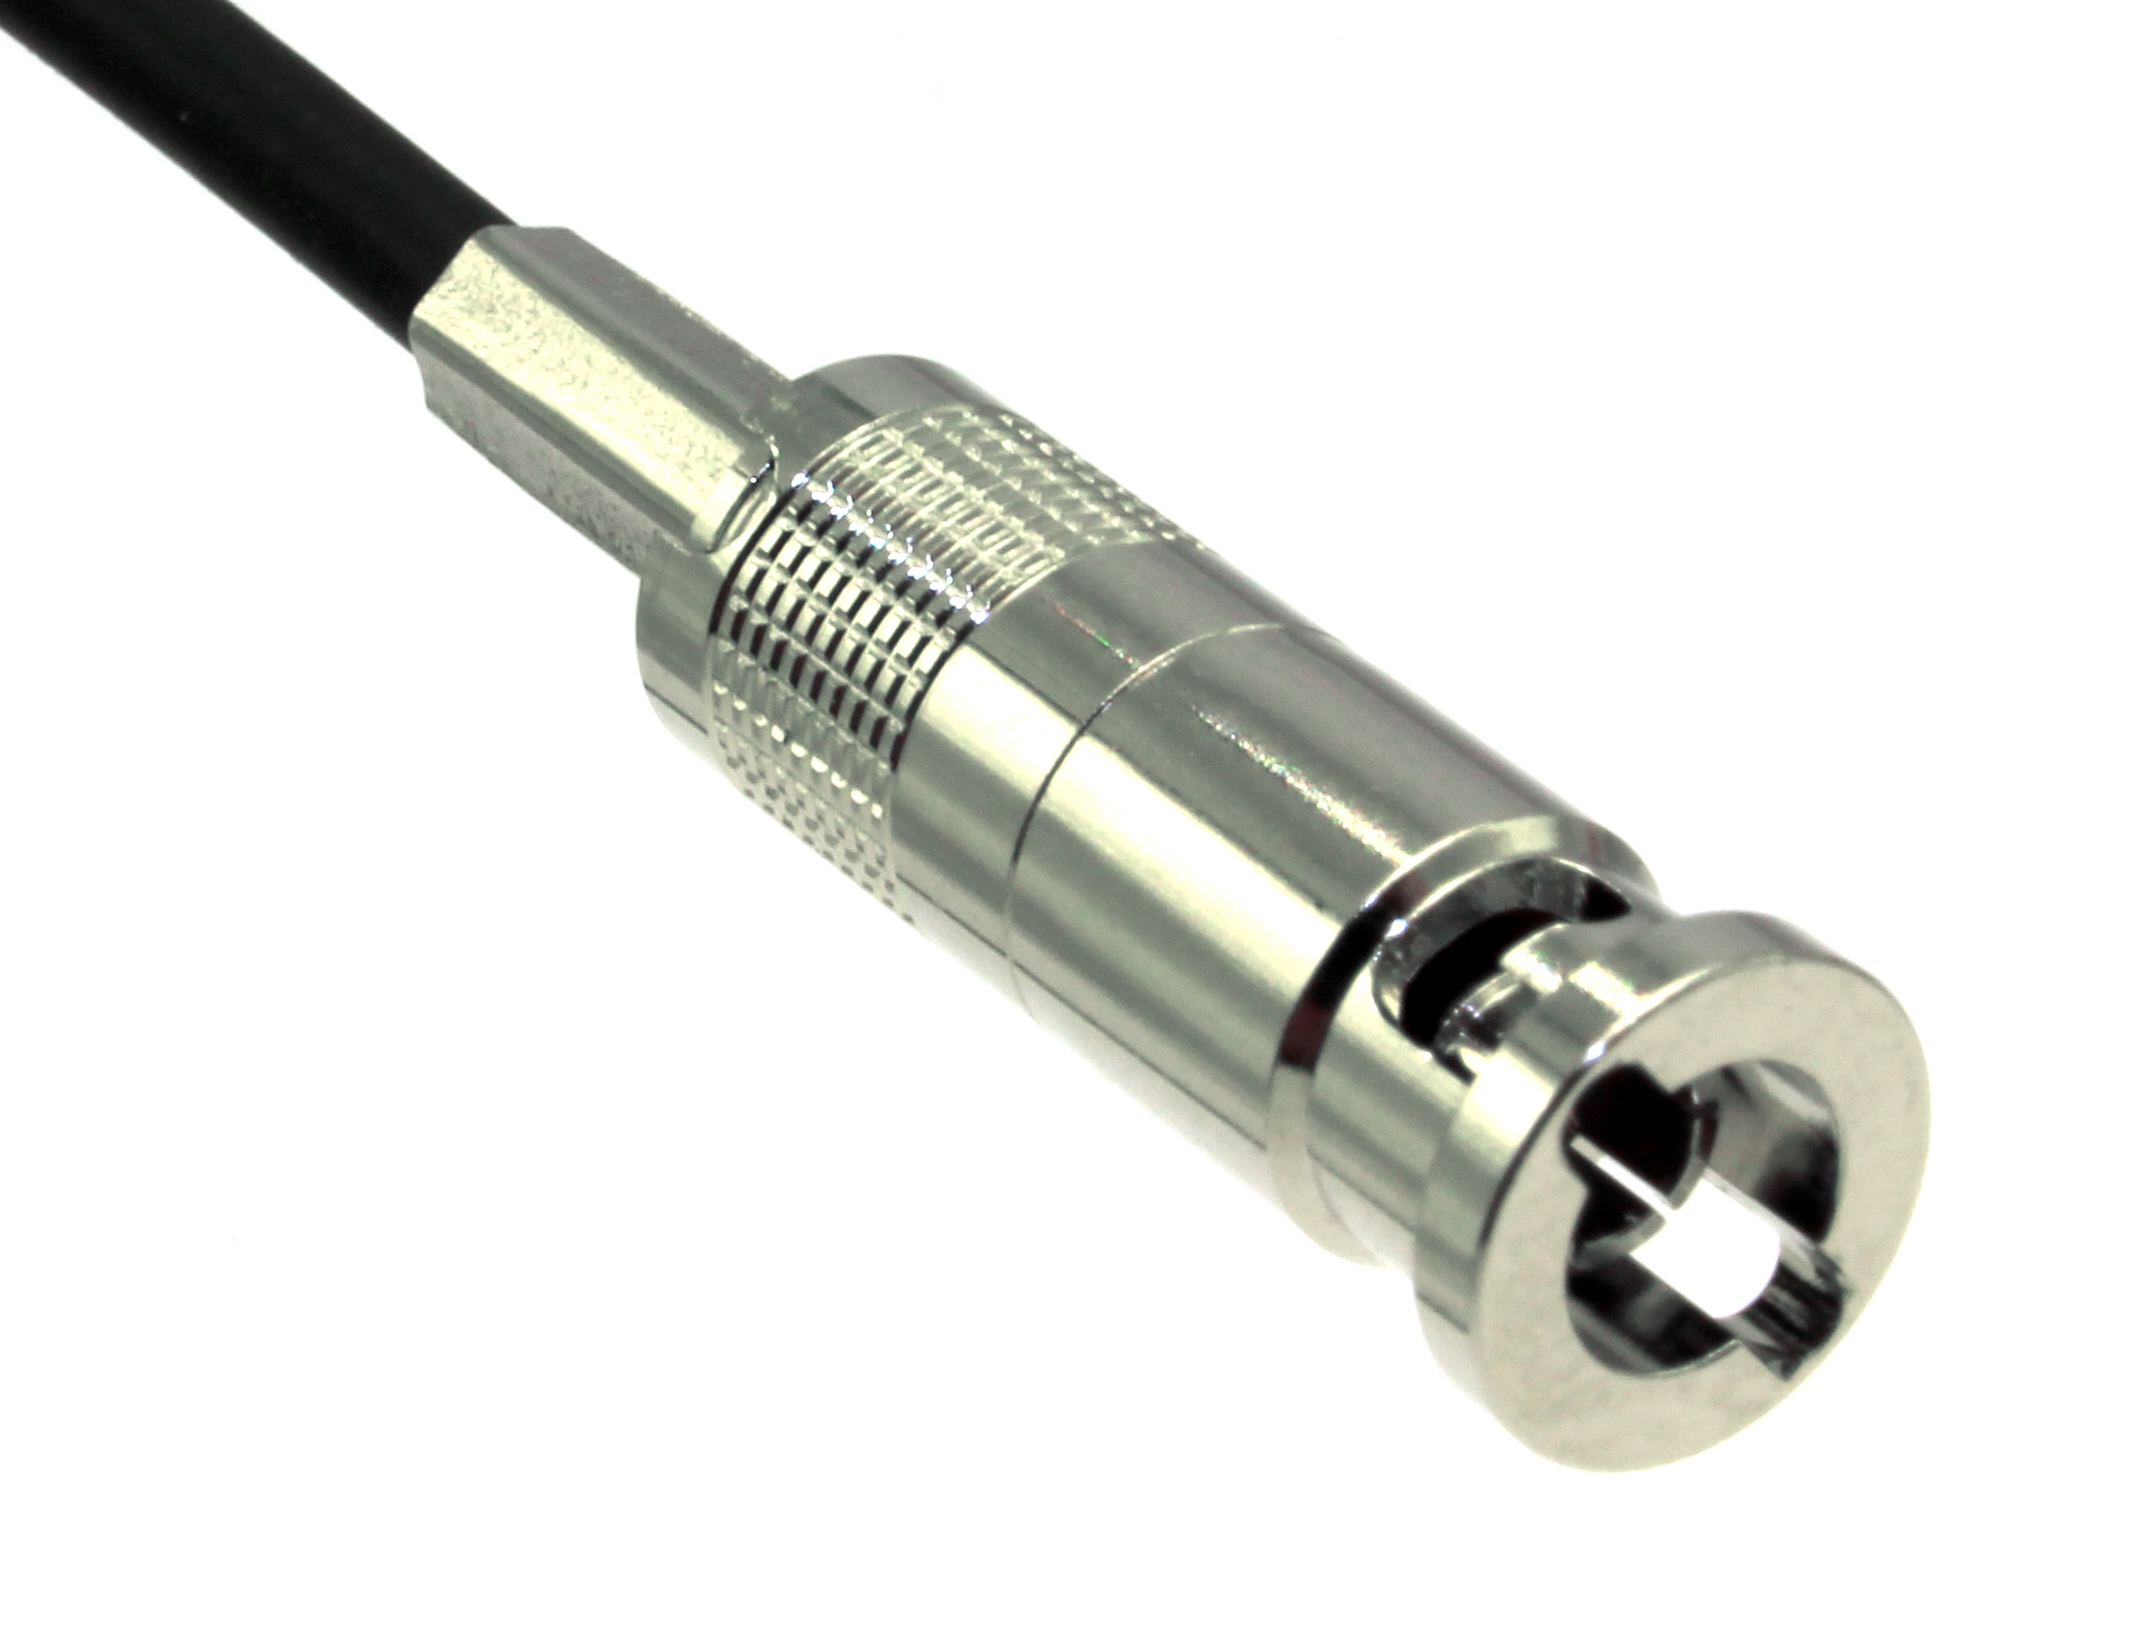 COAX Connectors offers SMPTE connectors for broadcast equipment